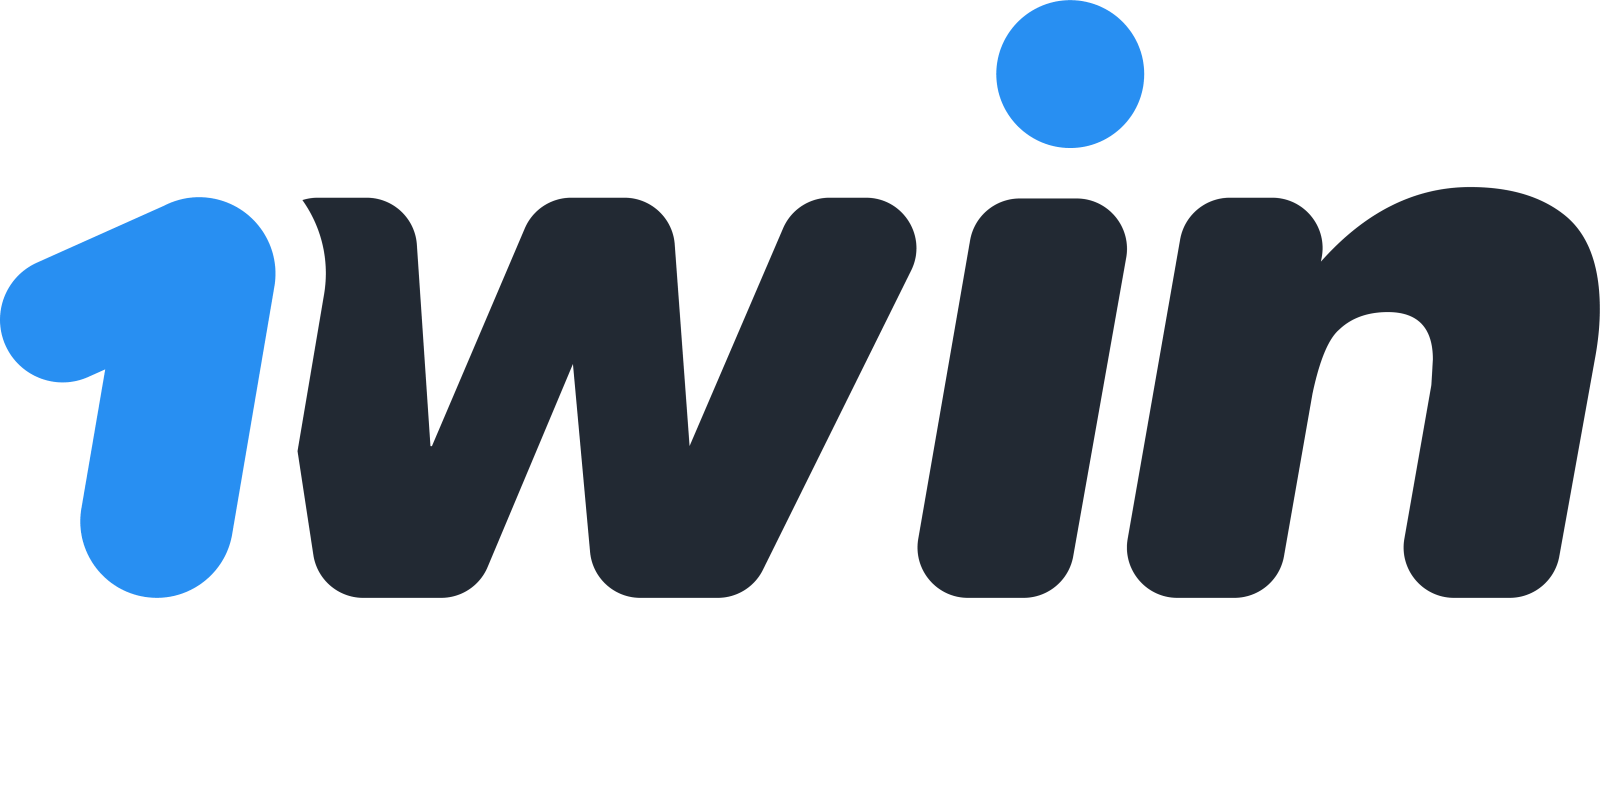 1win App Review